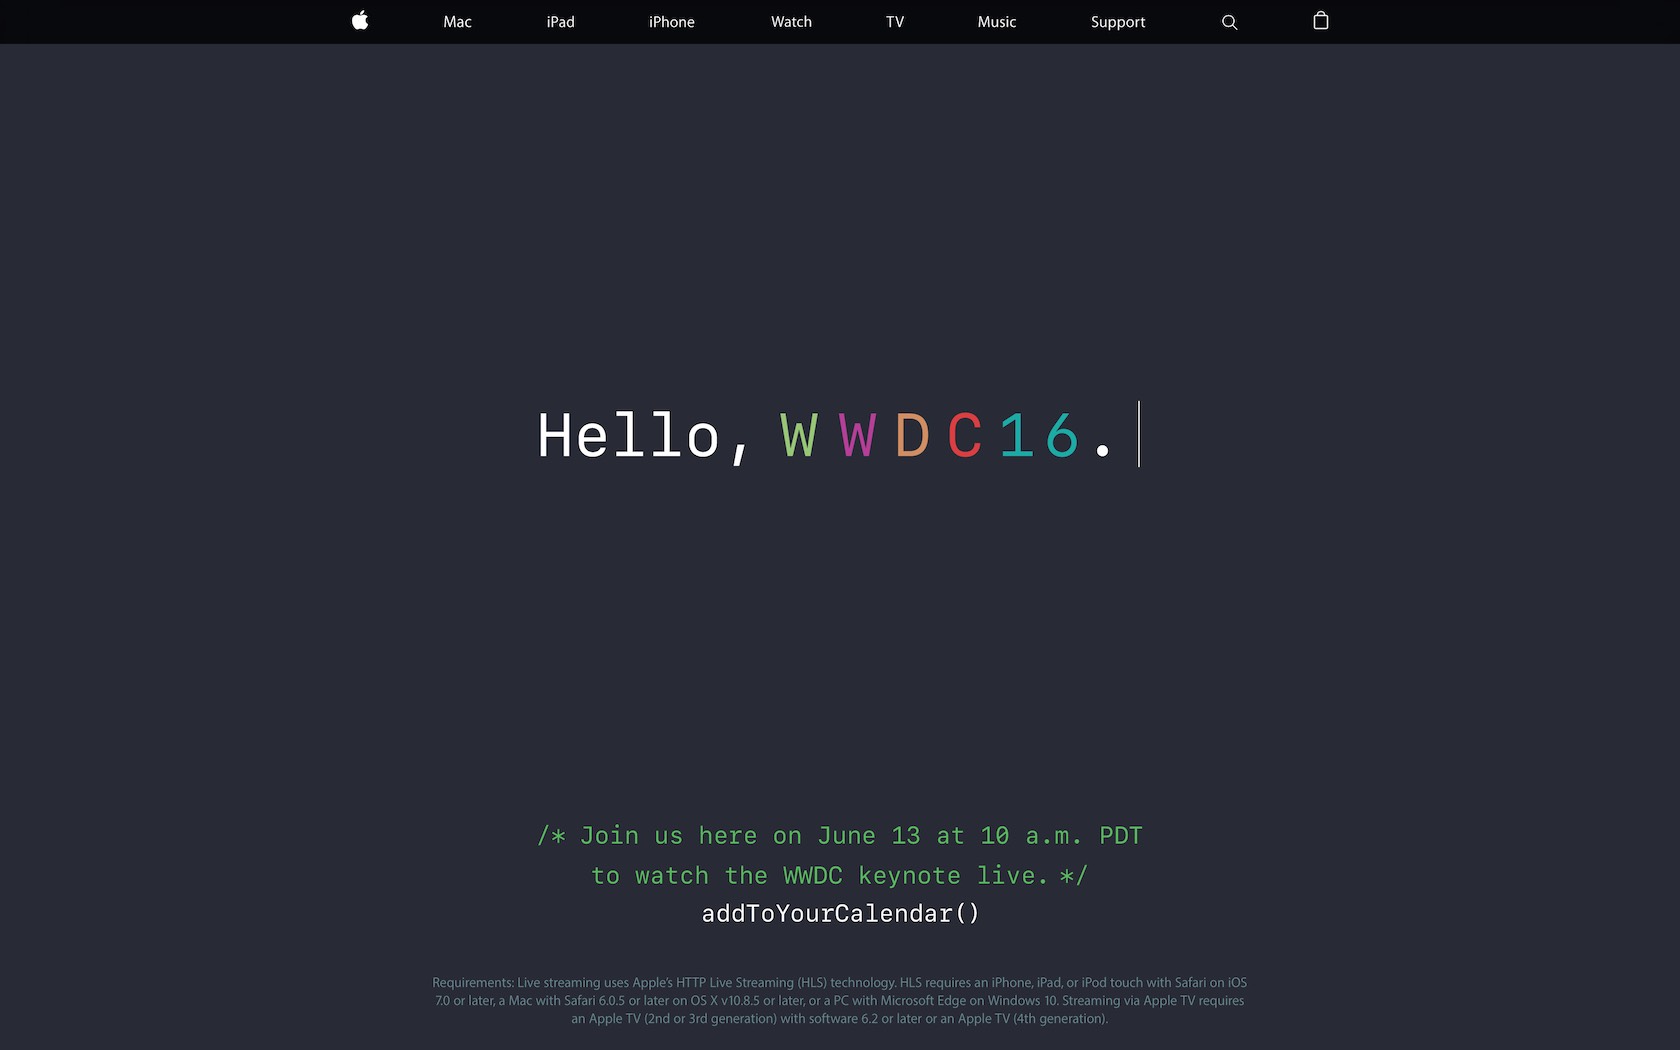 Hello WWDC16